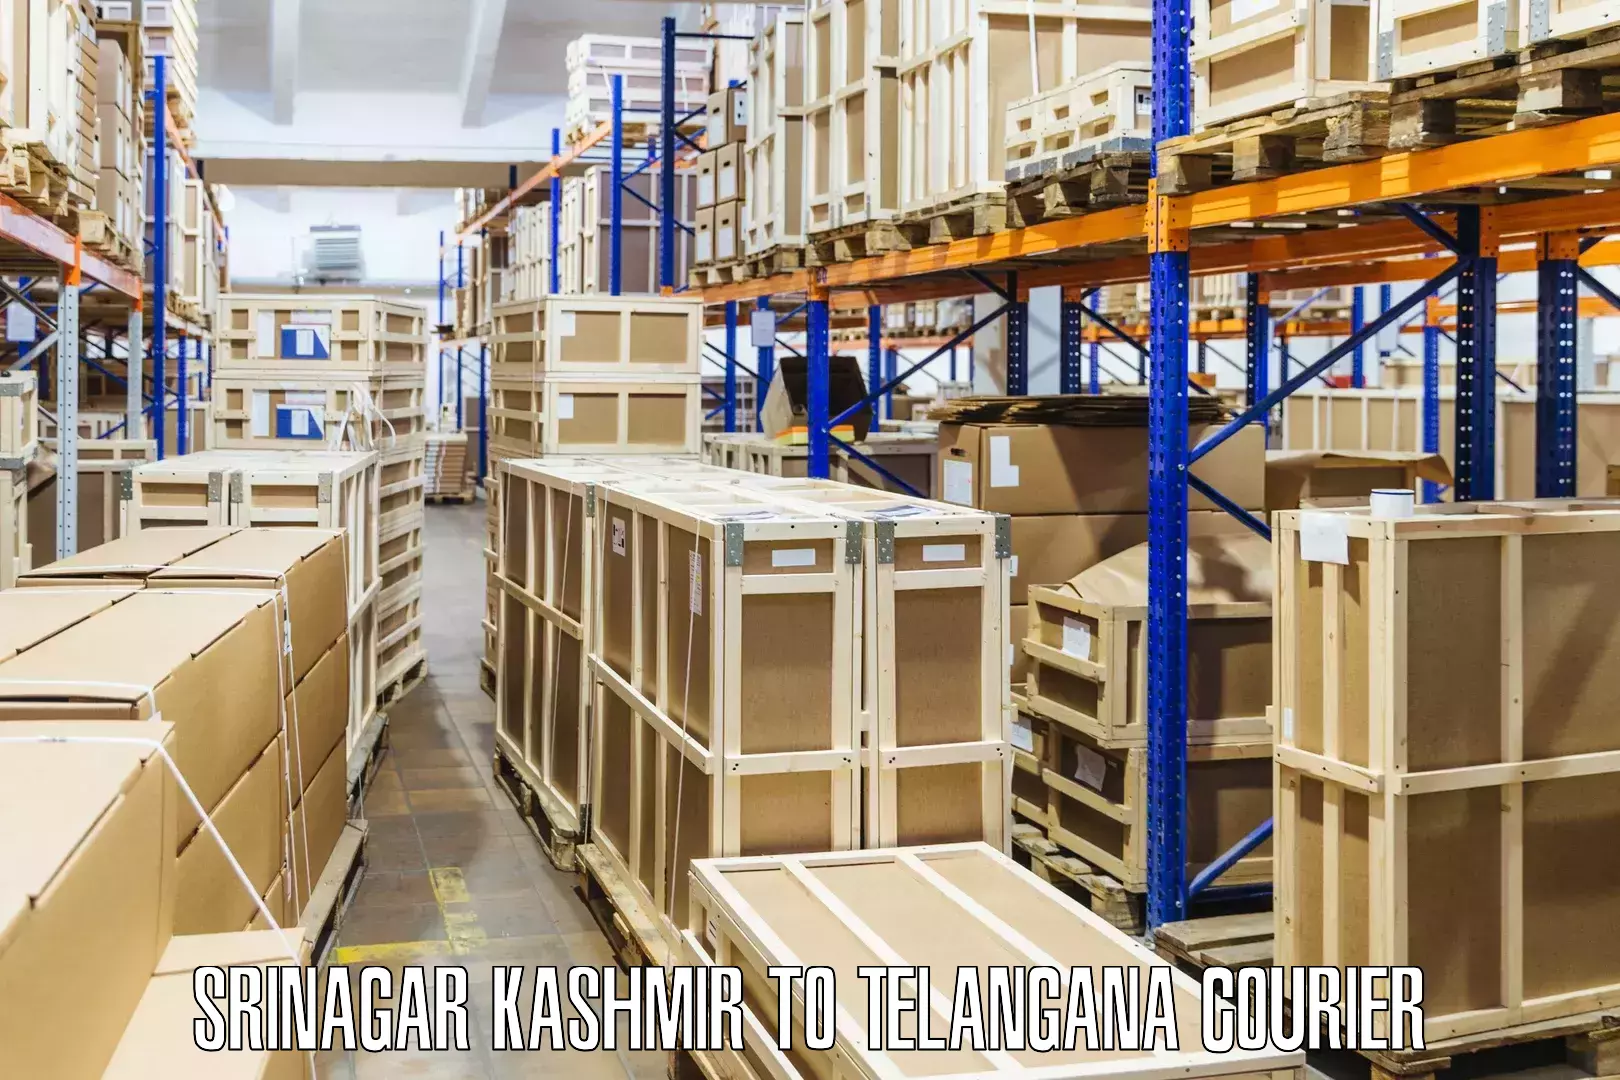 Full-service courier options Srinagar Kashmir to Jangaon